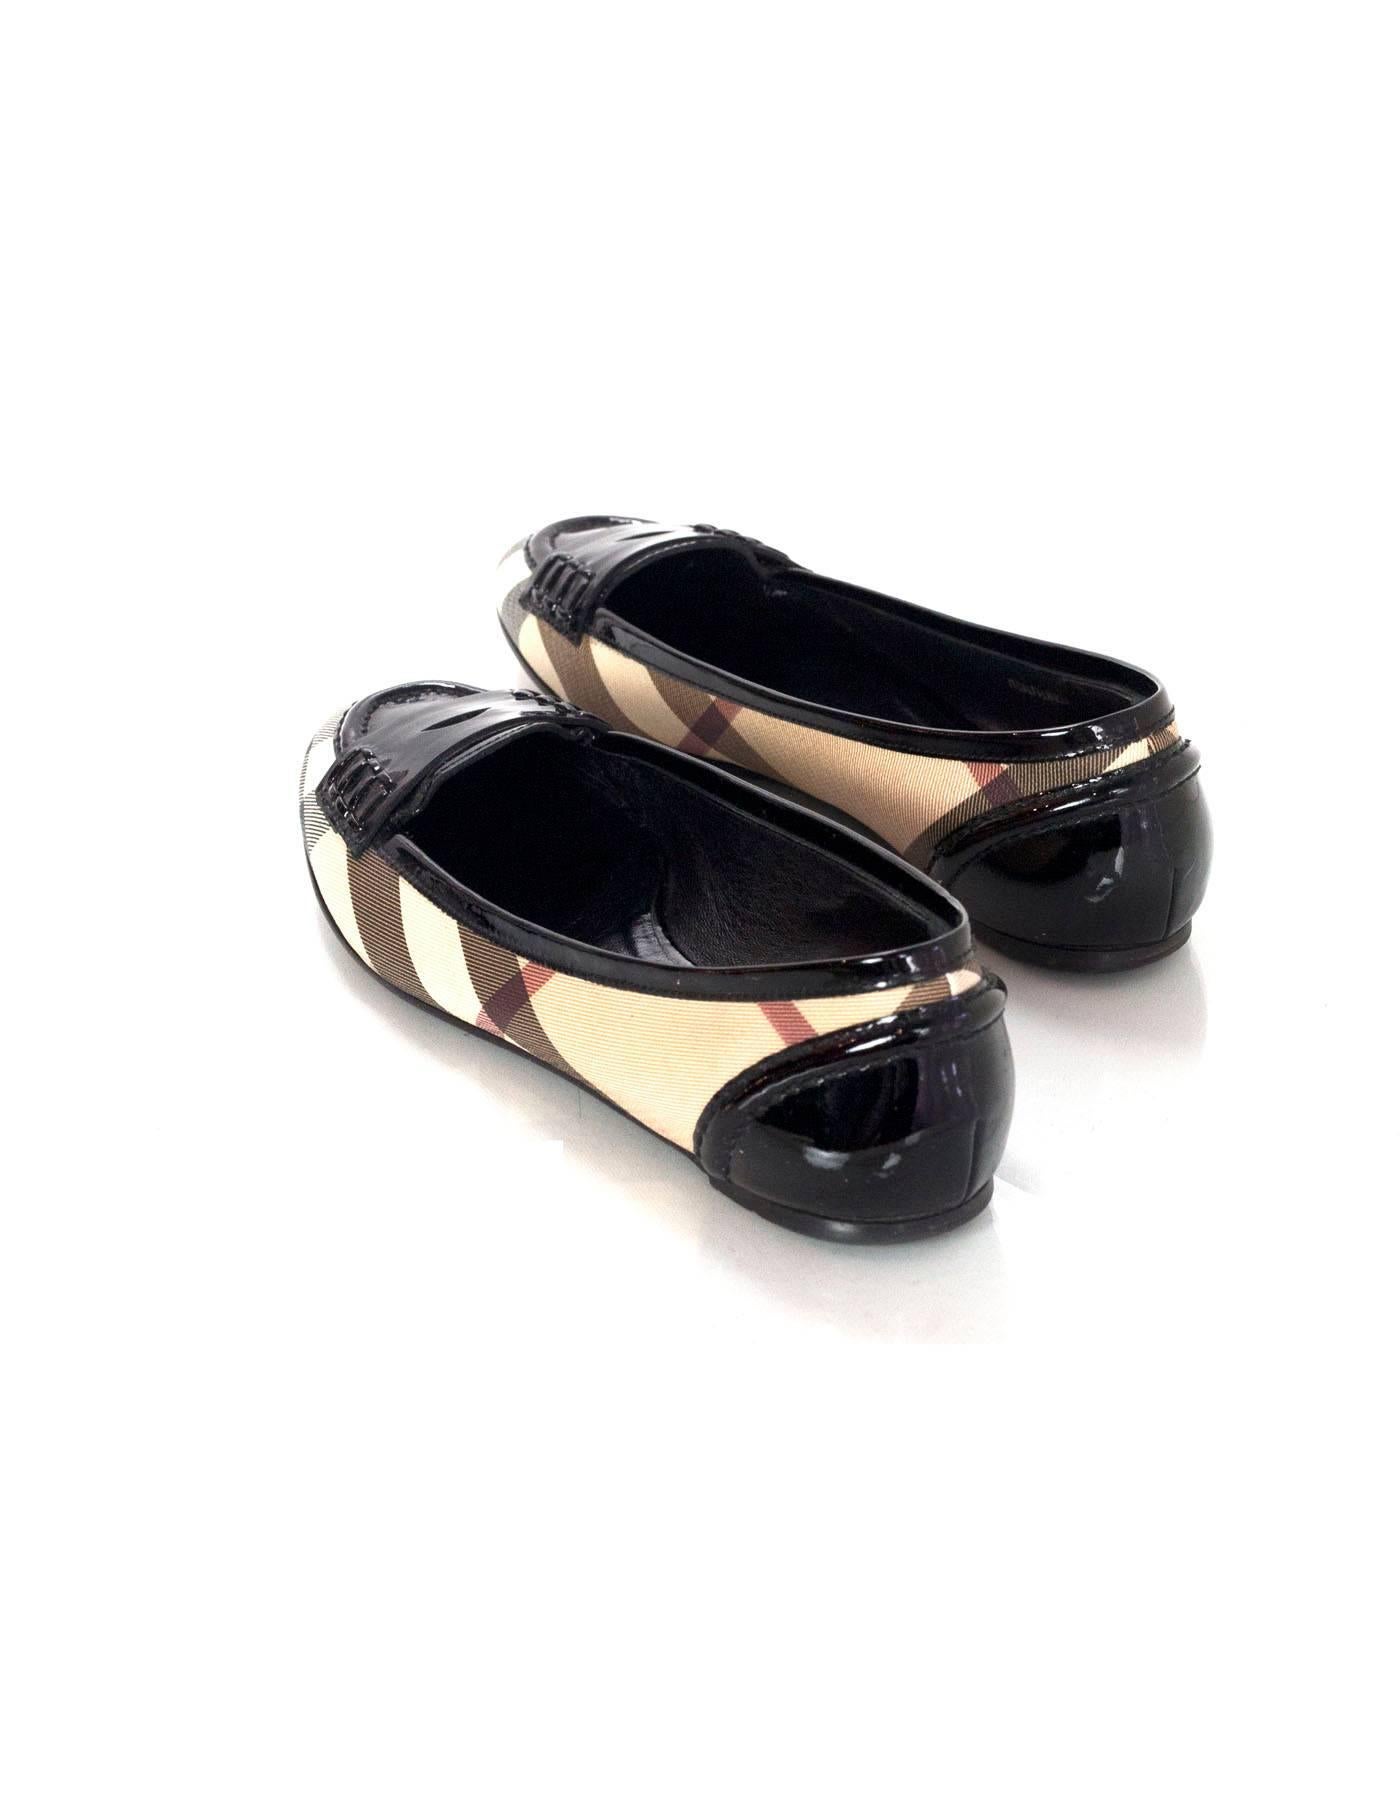 Black Burberry Nova Plaid Ballet Loafer Shoes Sz 37